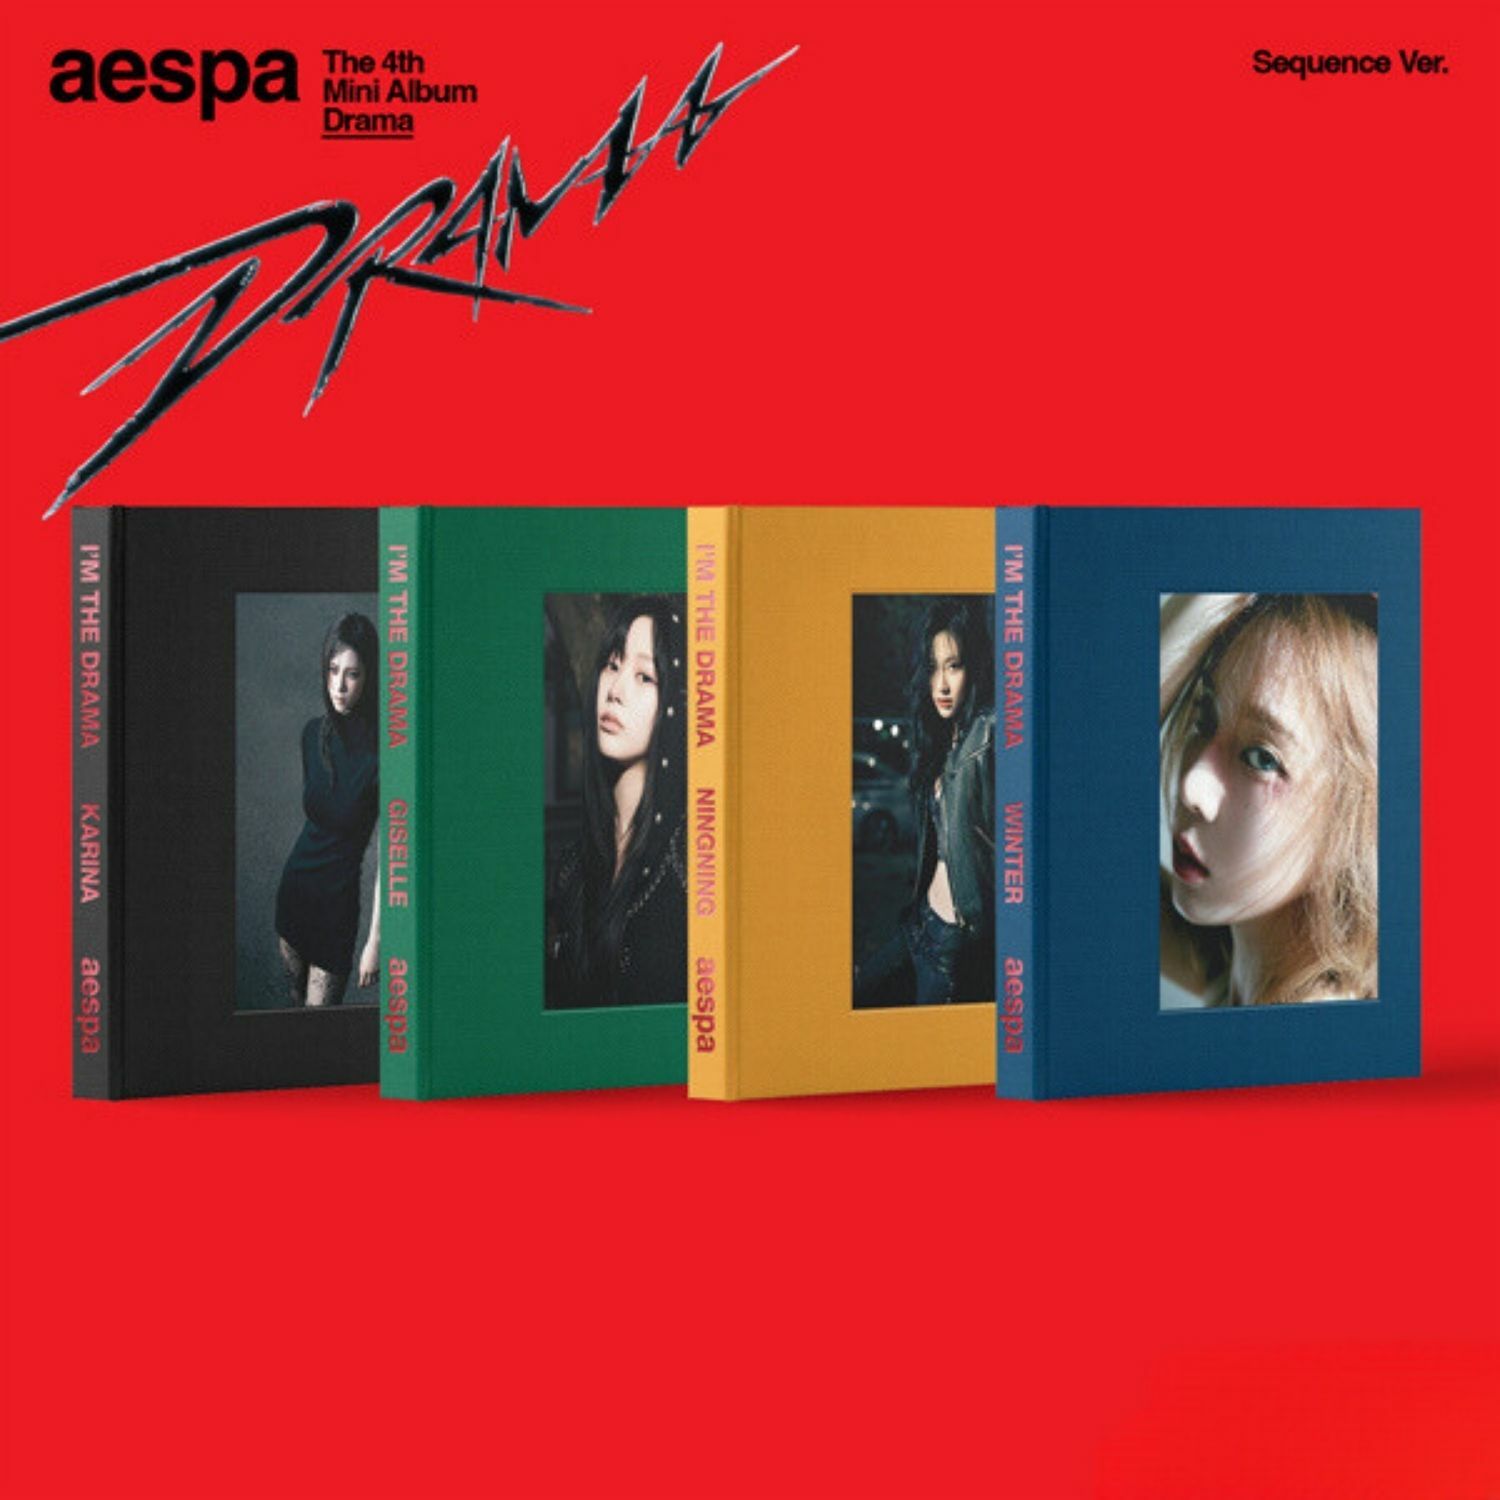 aespa Mini Album Vol. 4 – Drama (Sequence Ver.)